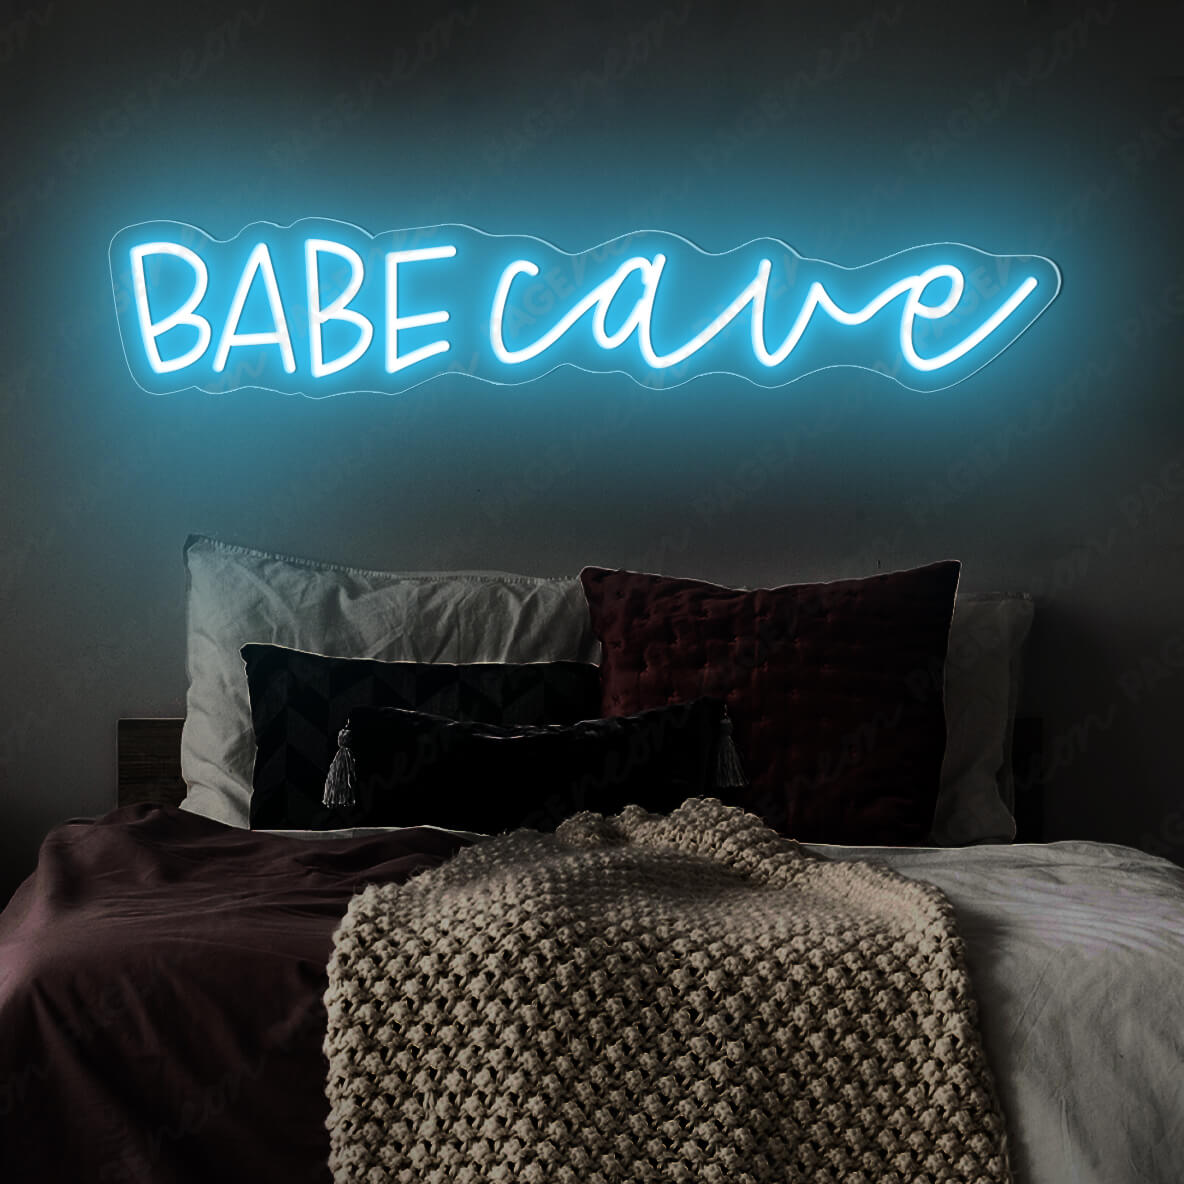 Babe Cave Neon Sign Led Light Light Blue